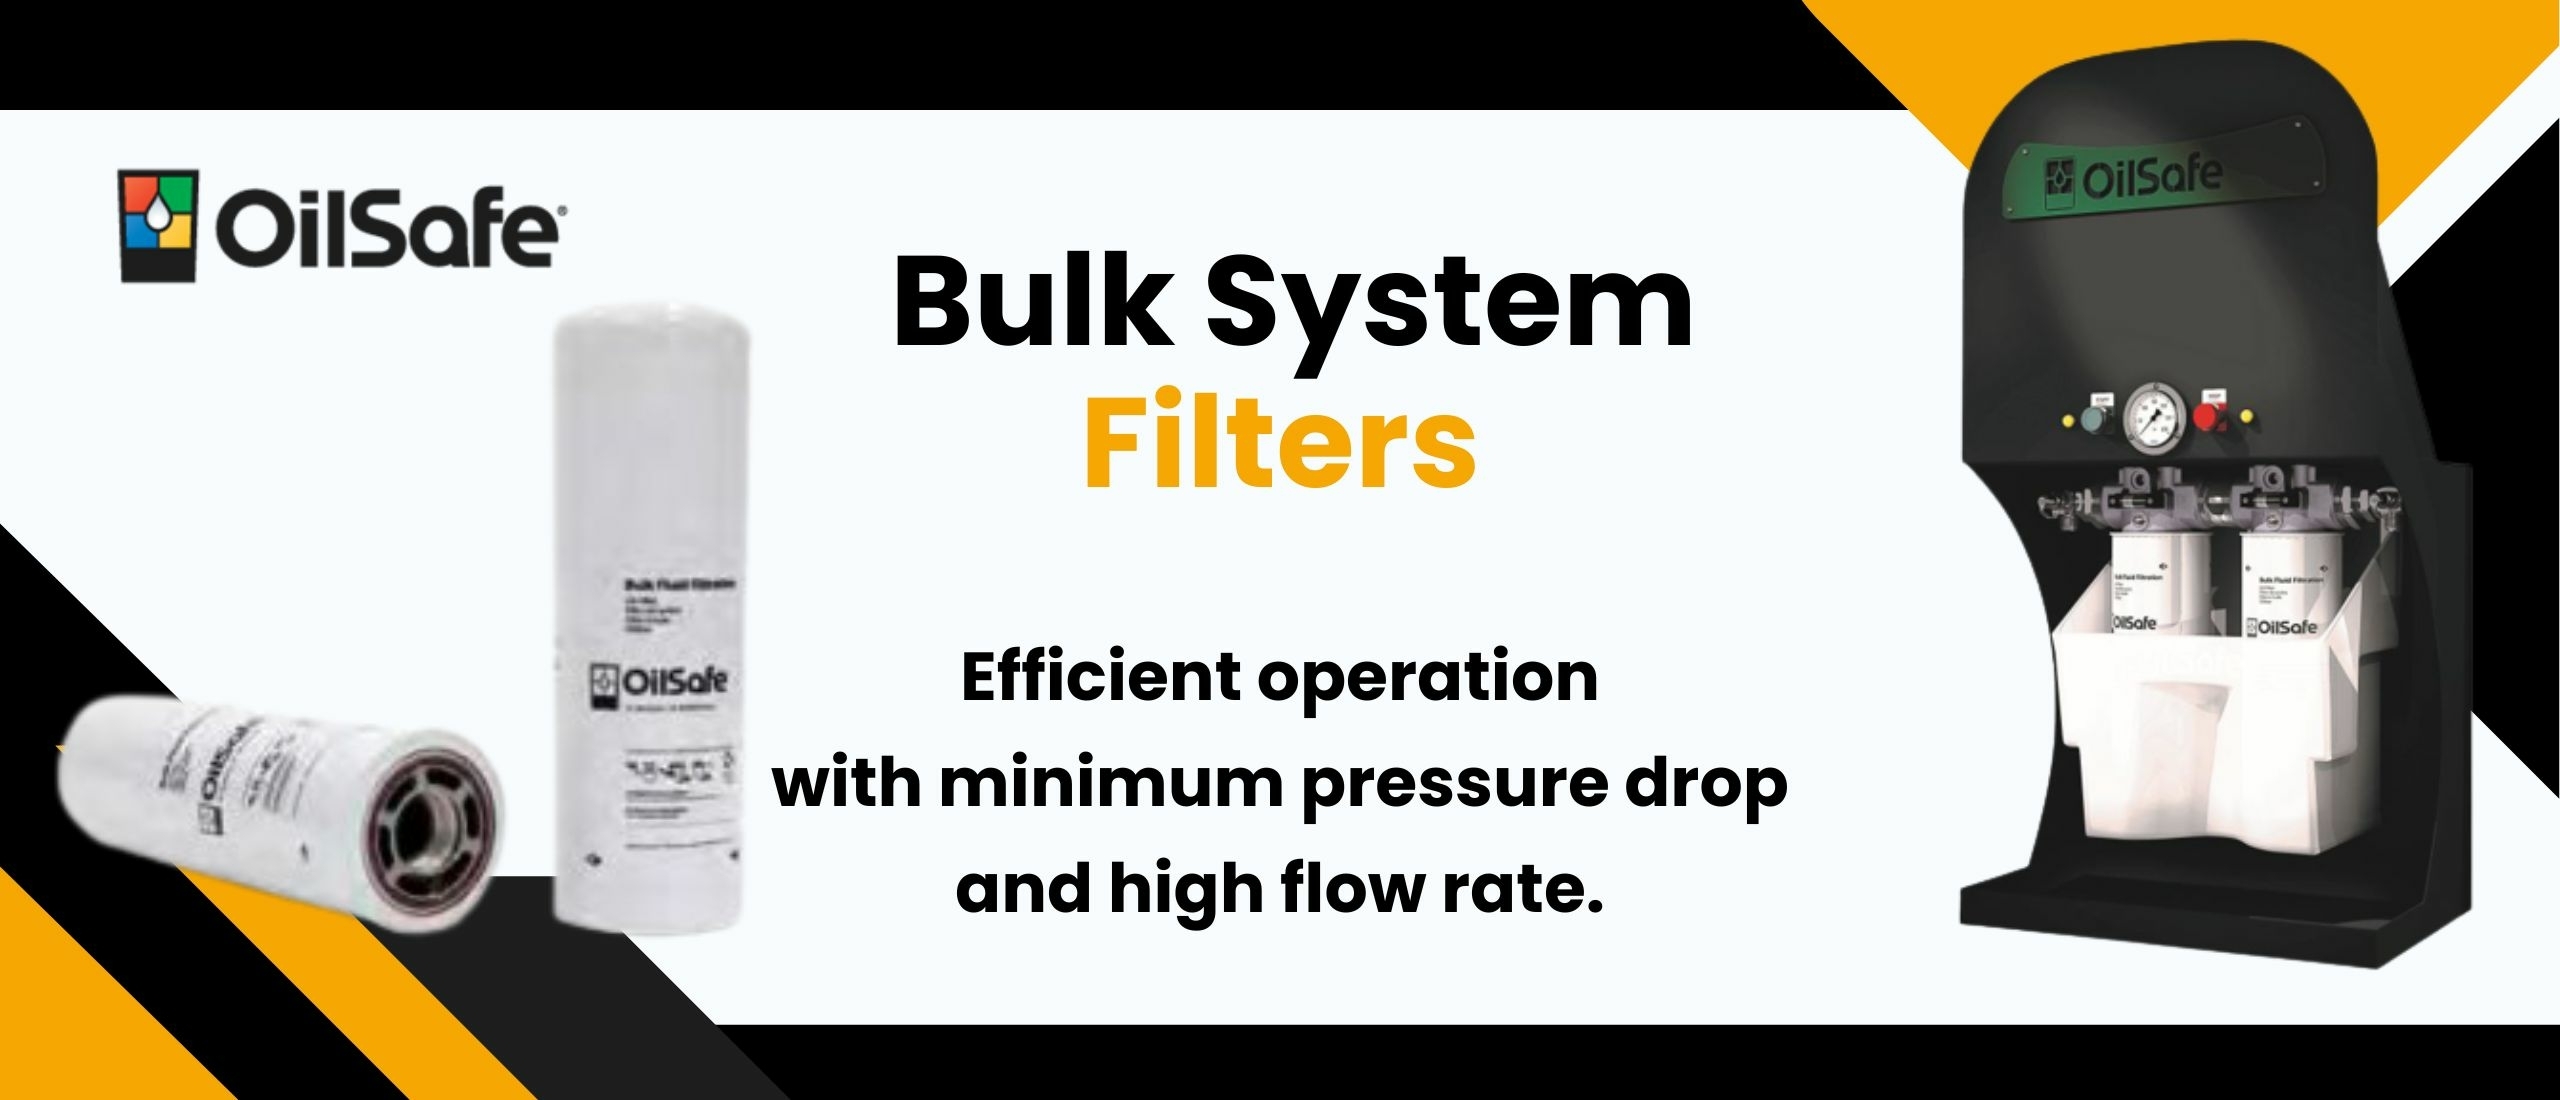 Bulk system filters